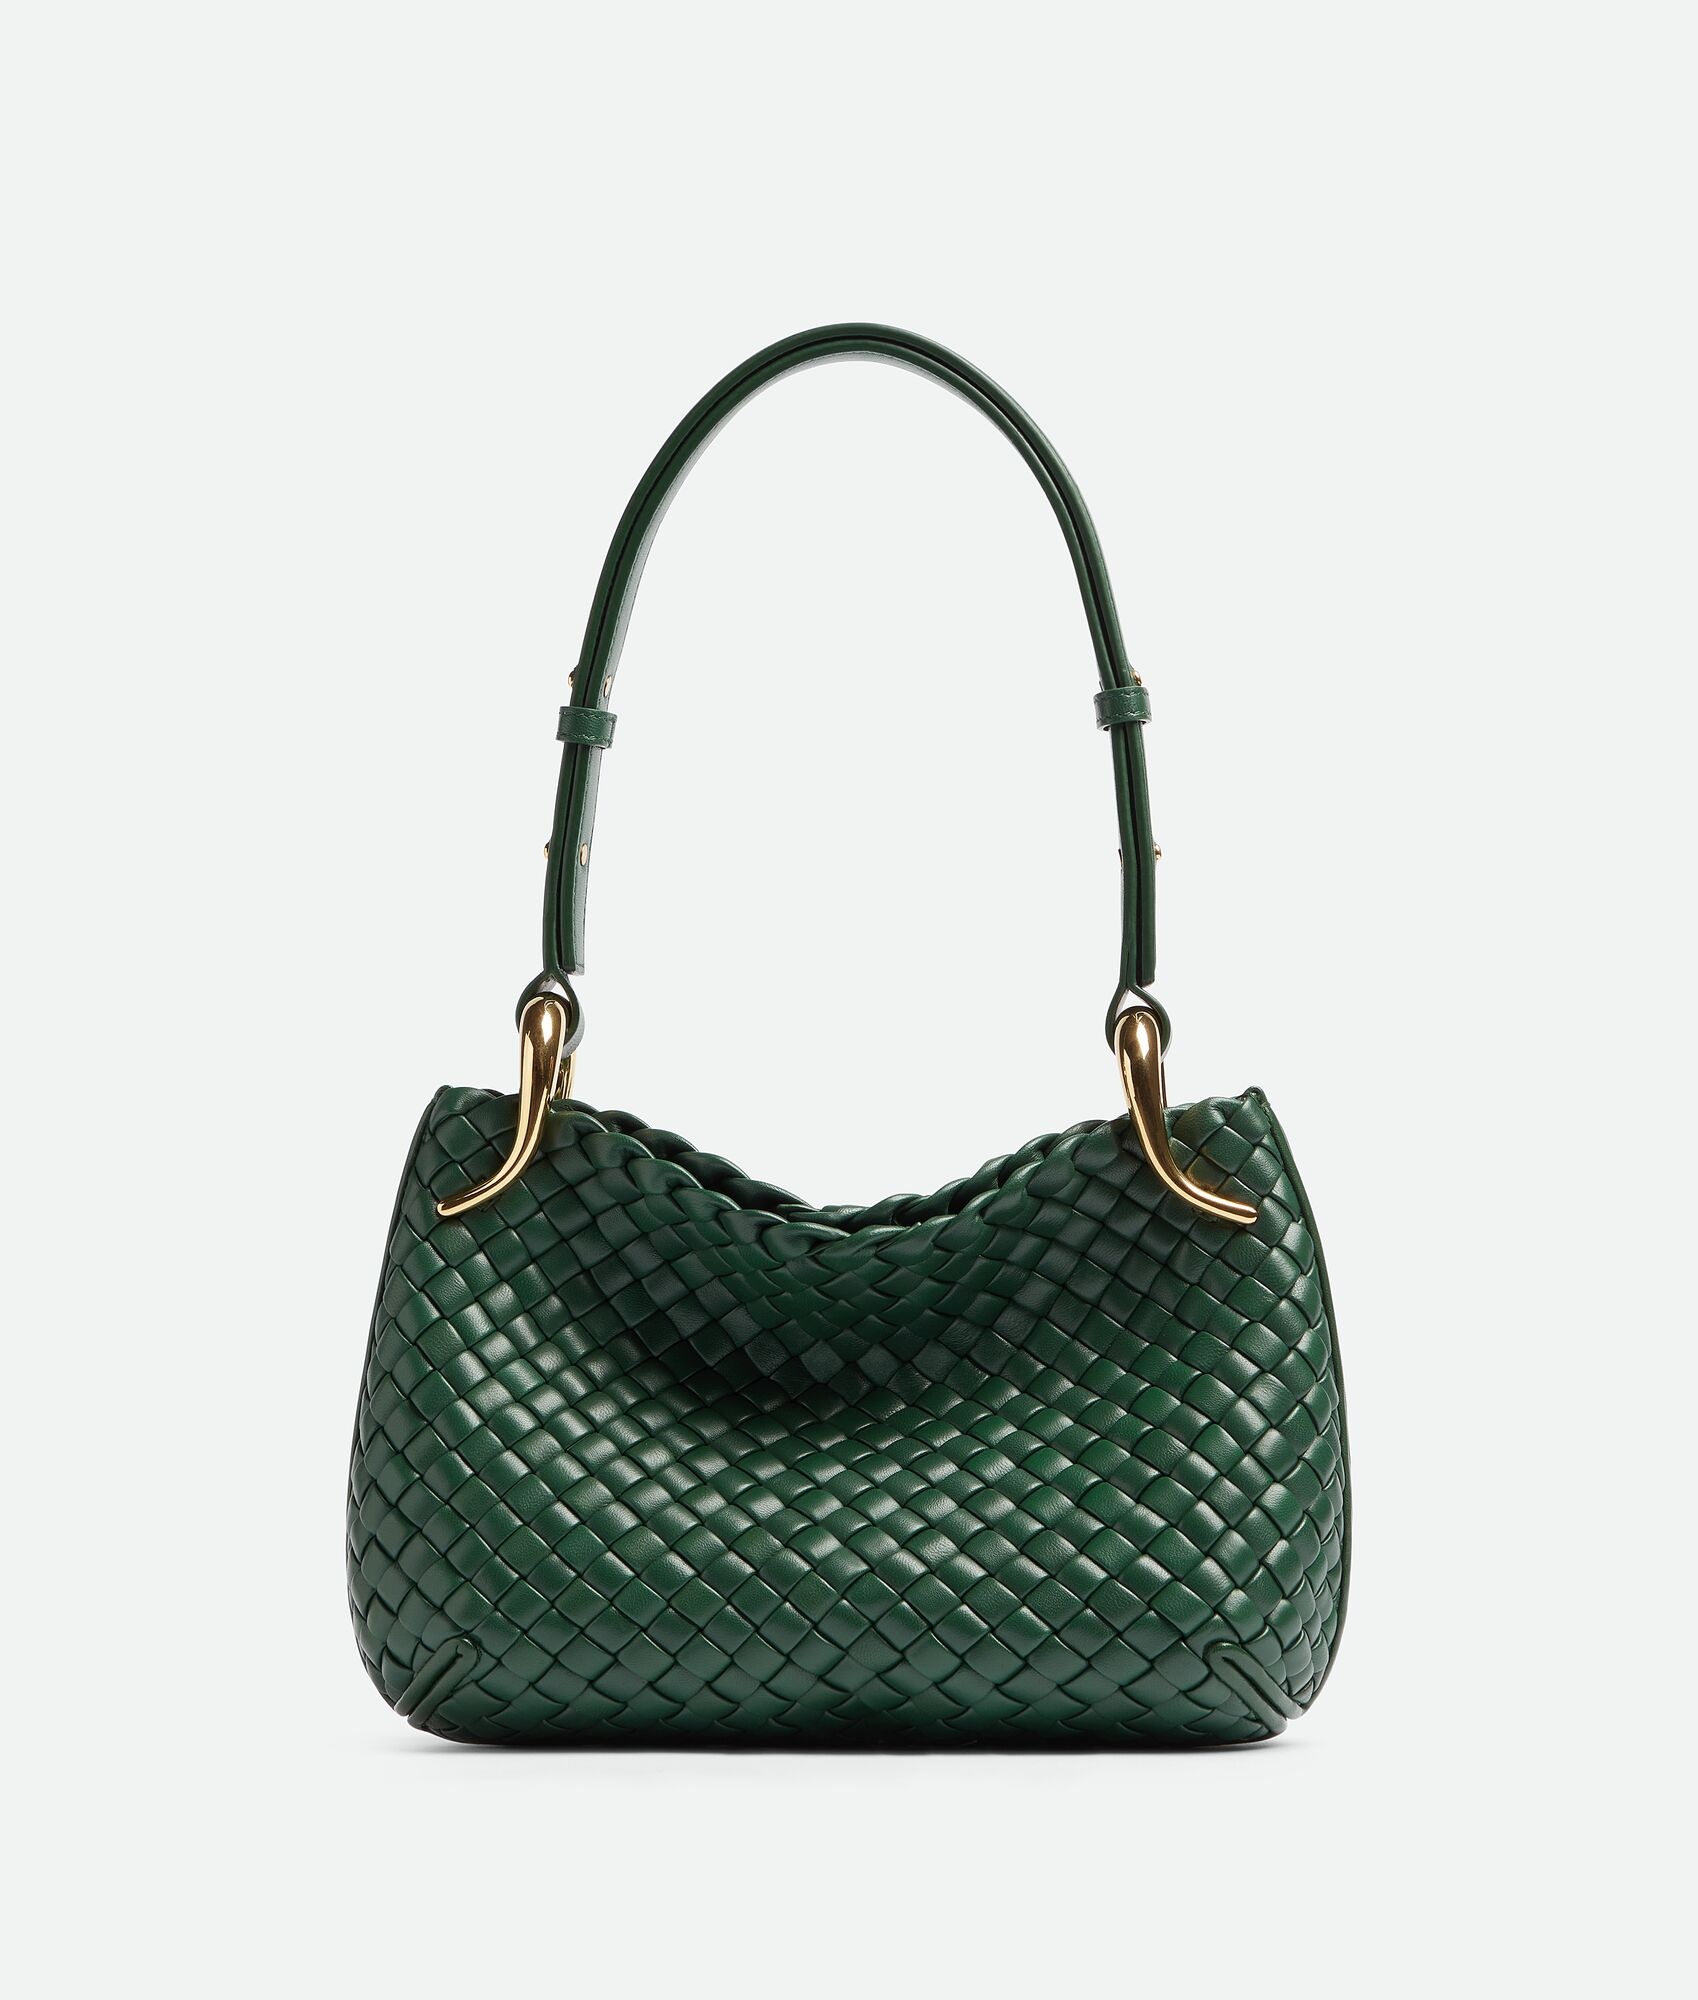 Bottega Veneta Women's Small Padded Intreccio Leather Shoulder Bag